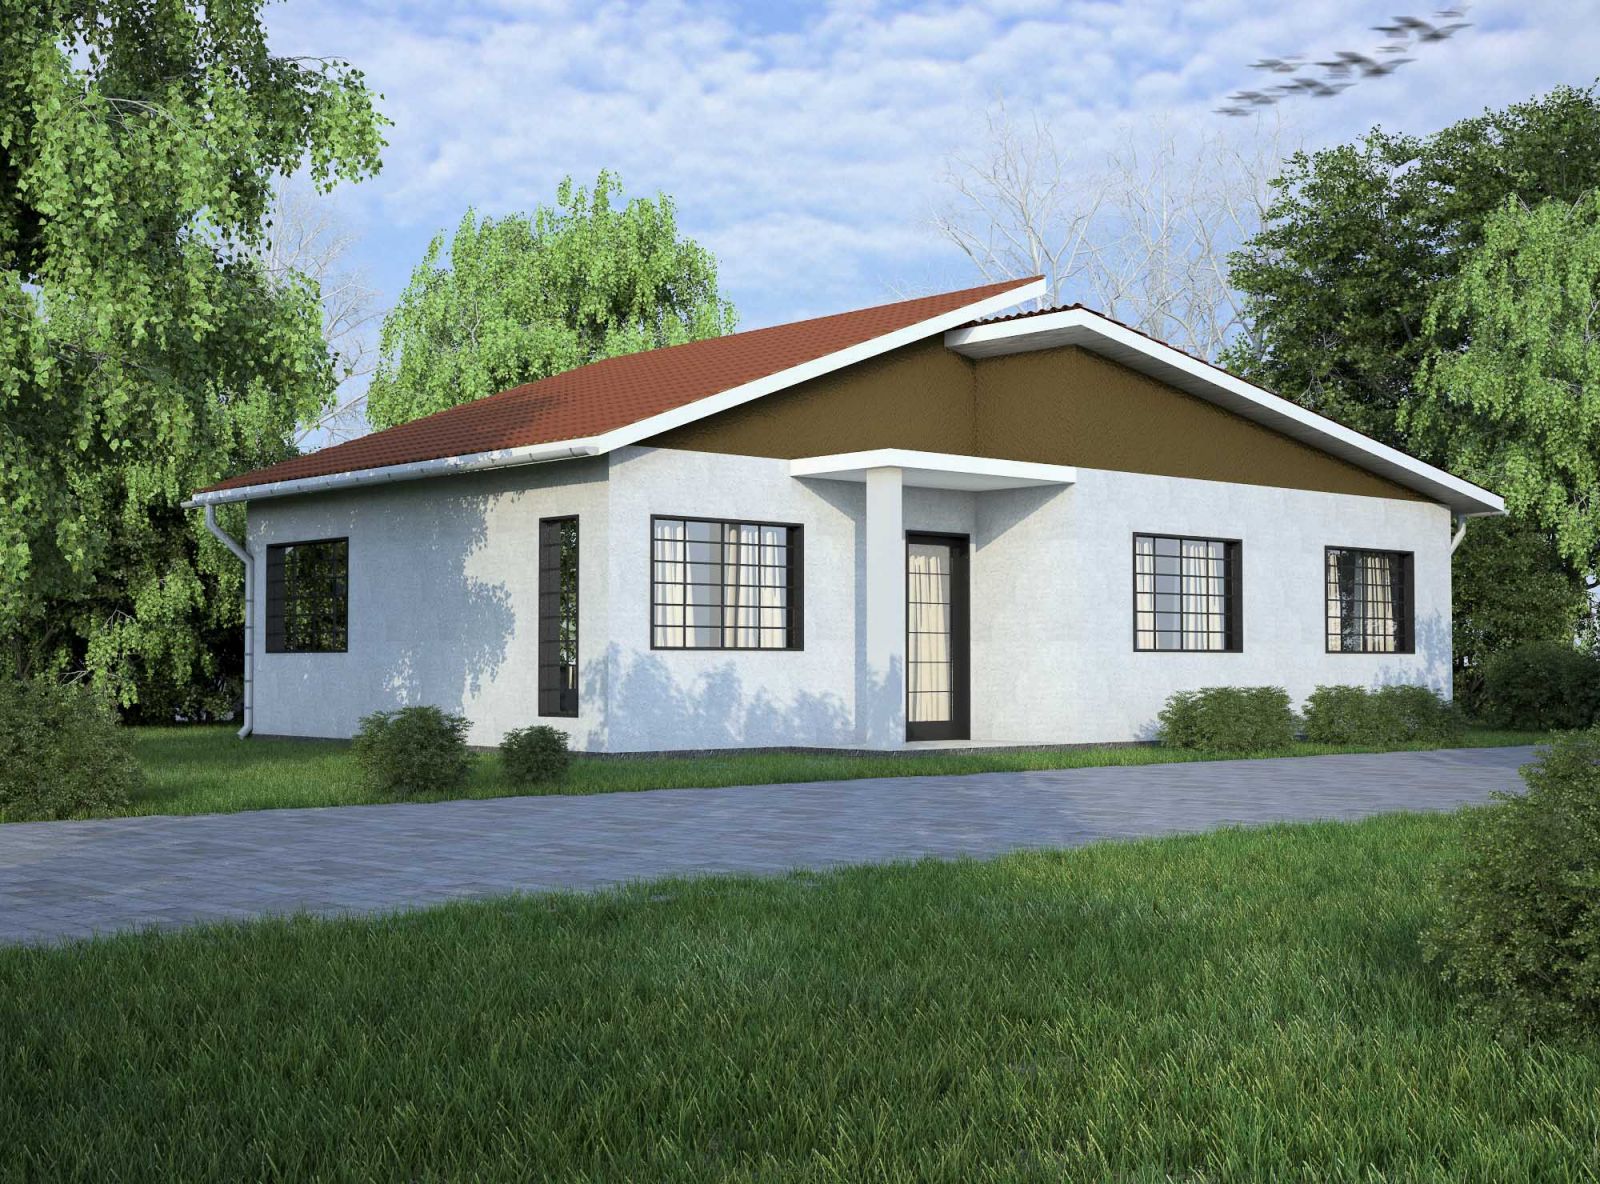 Modern Iron Sheet House Designs In Kenya burnsocial